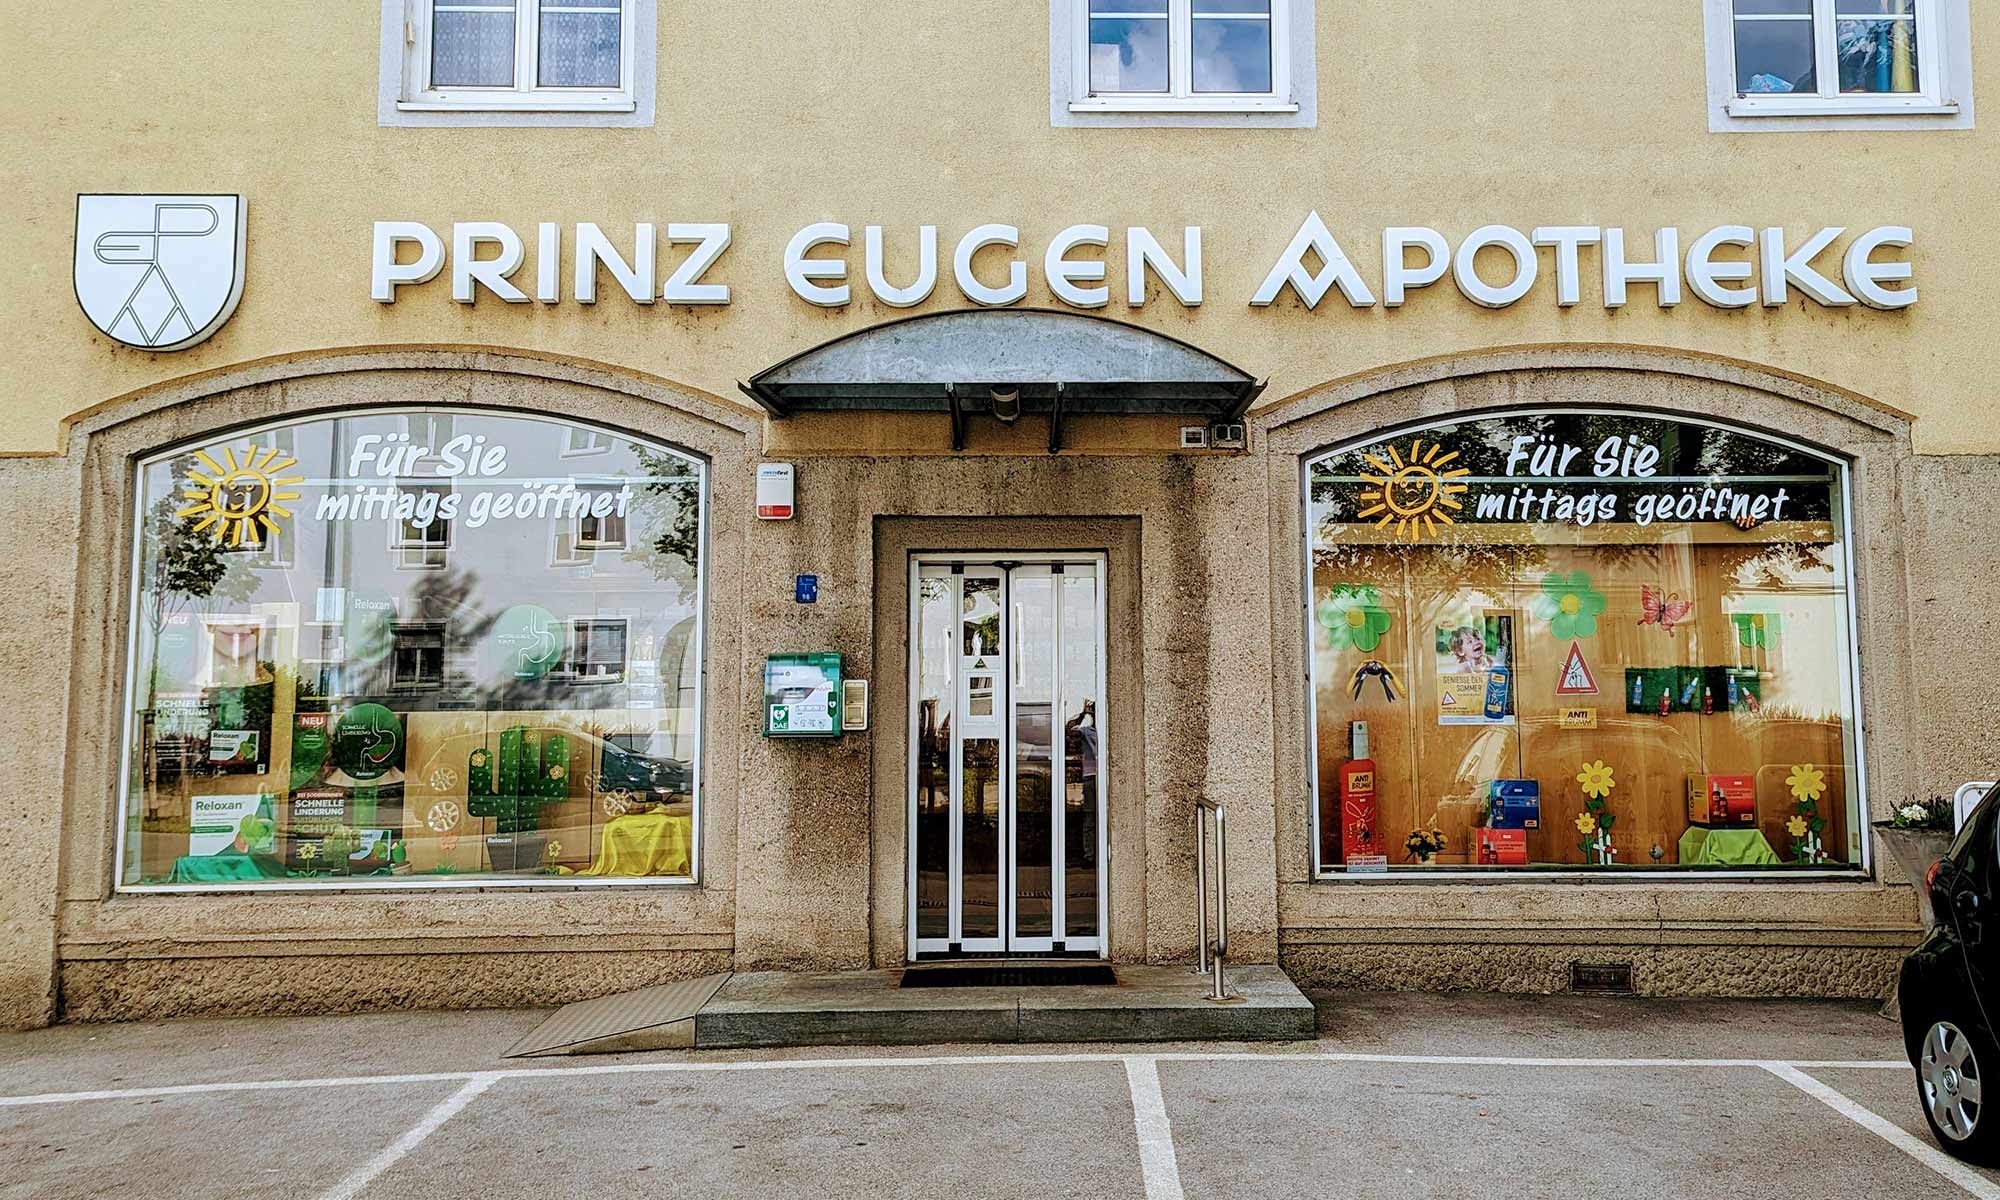 Apotheker in Innsbruck